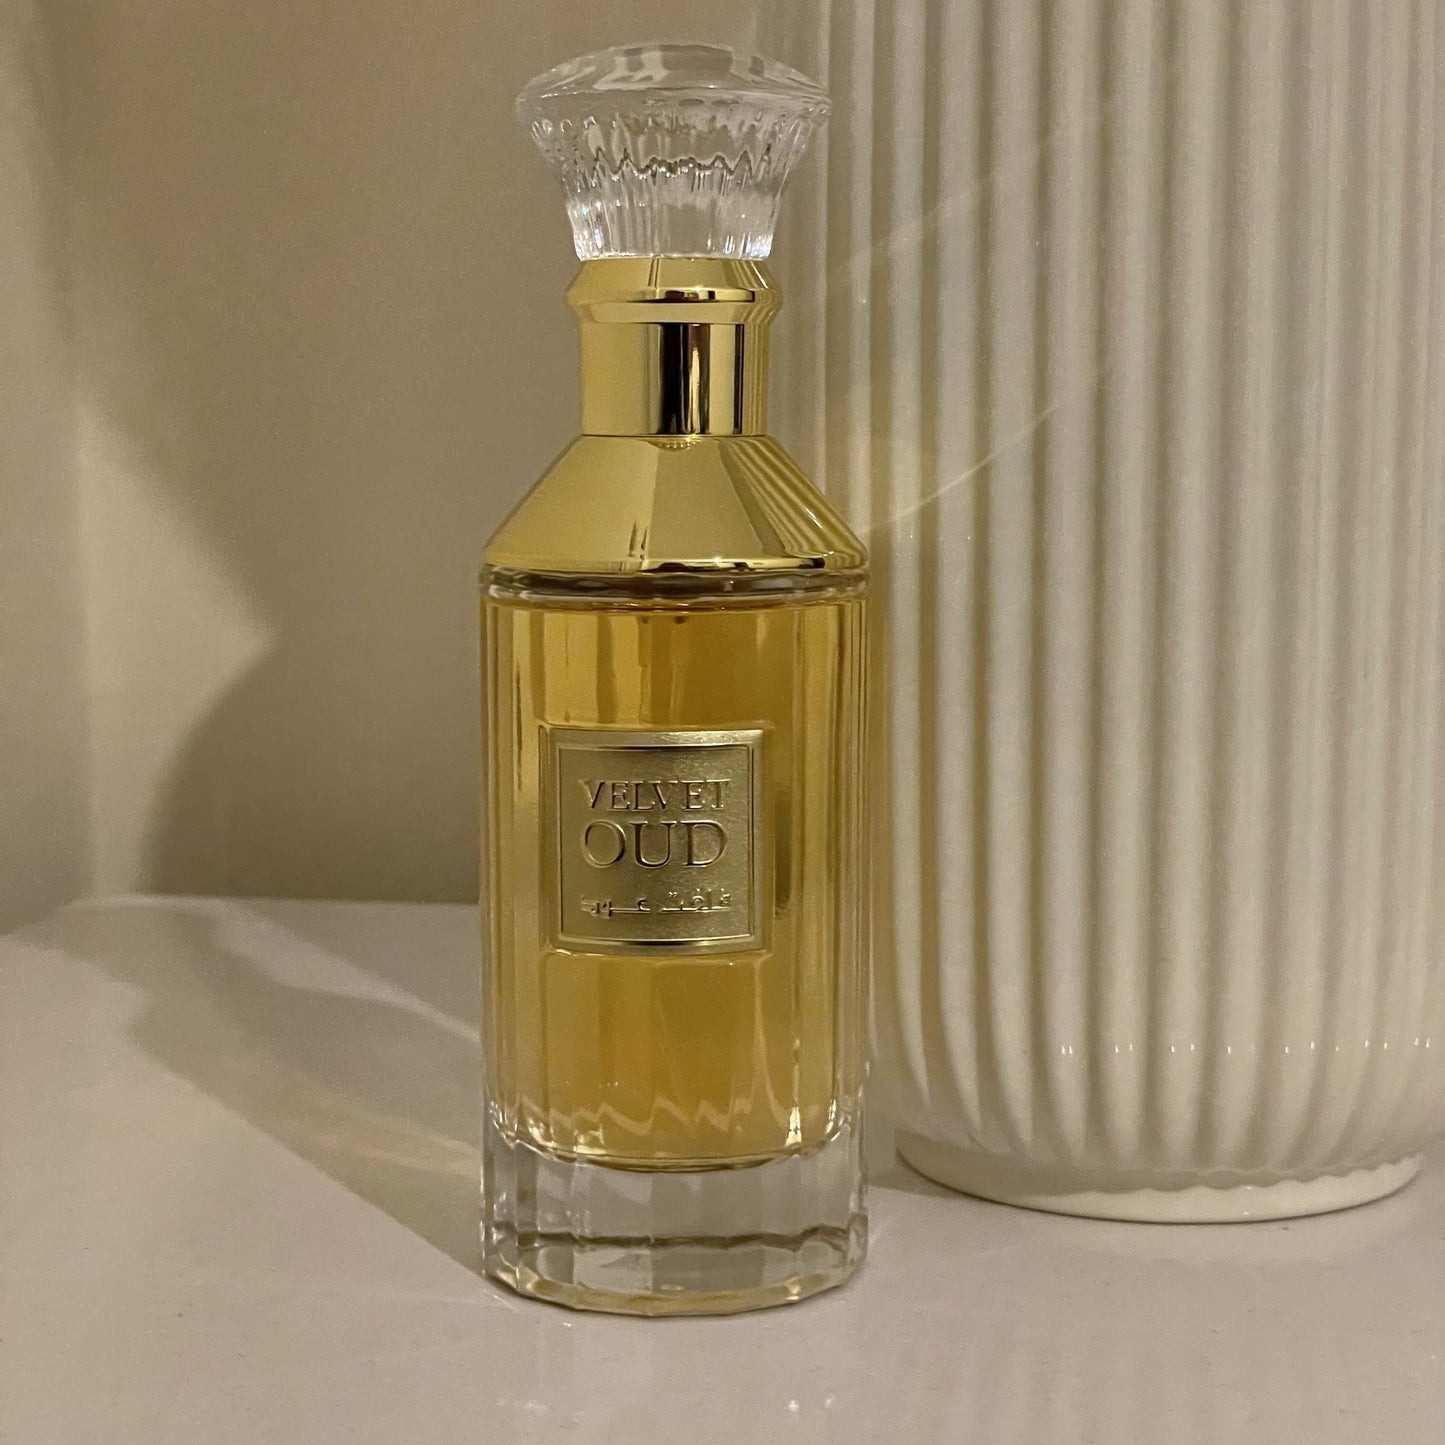 Lattafa Velvet Oud, beautiful perfume bottle, luxury perfume packaging, perfume gift, long lasting perfume